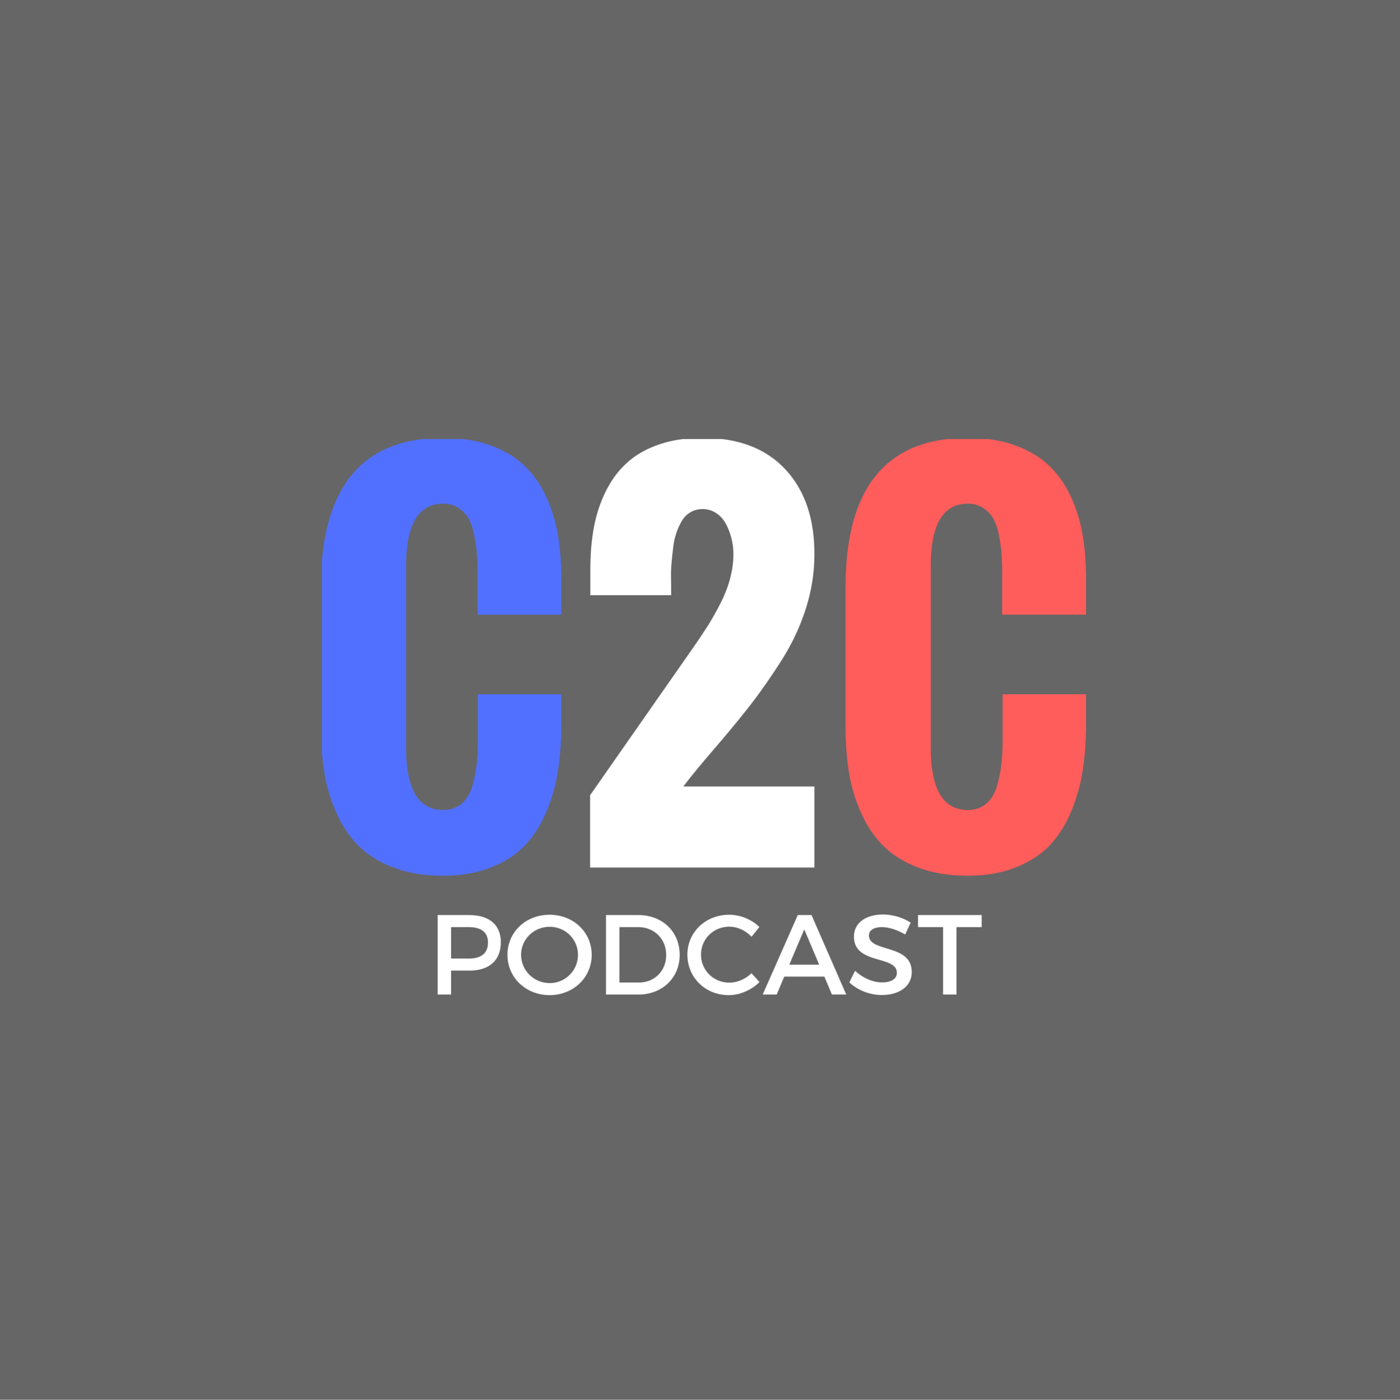 Coast 2 Coast Podcast Episode #18: Toronto Raptors Breakdown with Lior Kozai